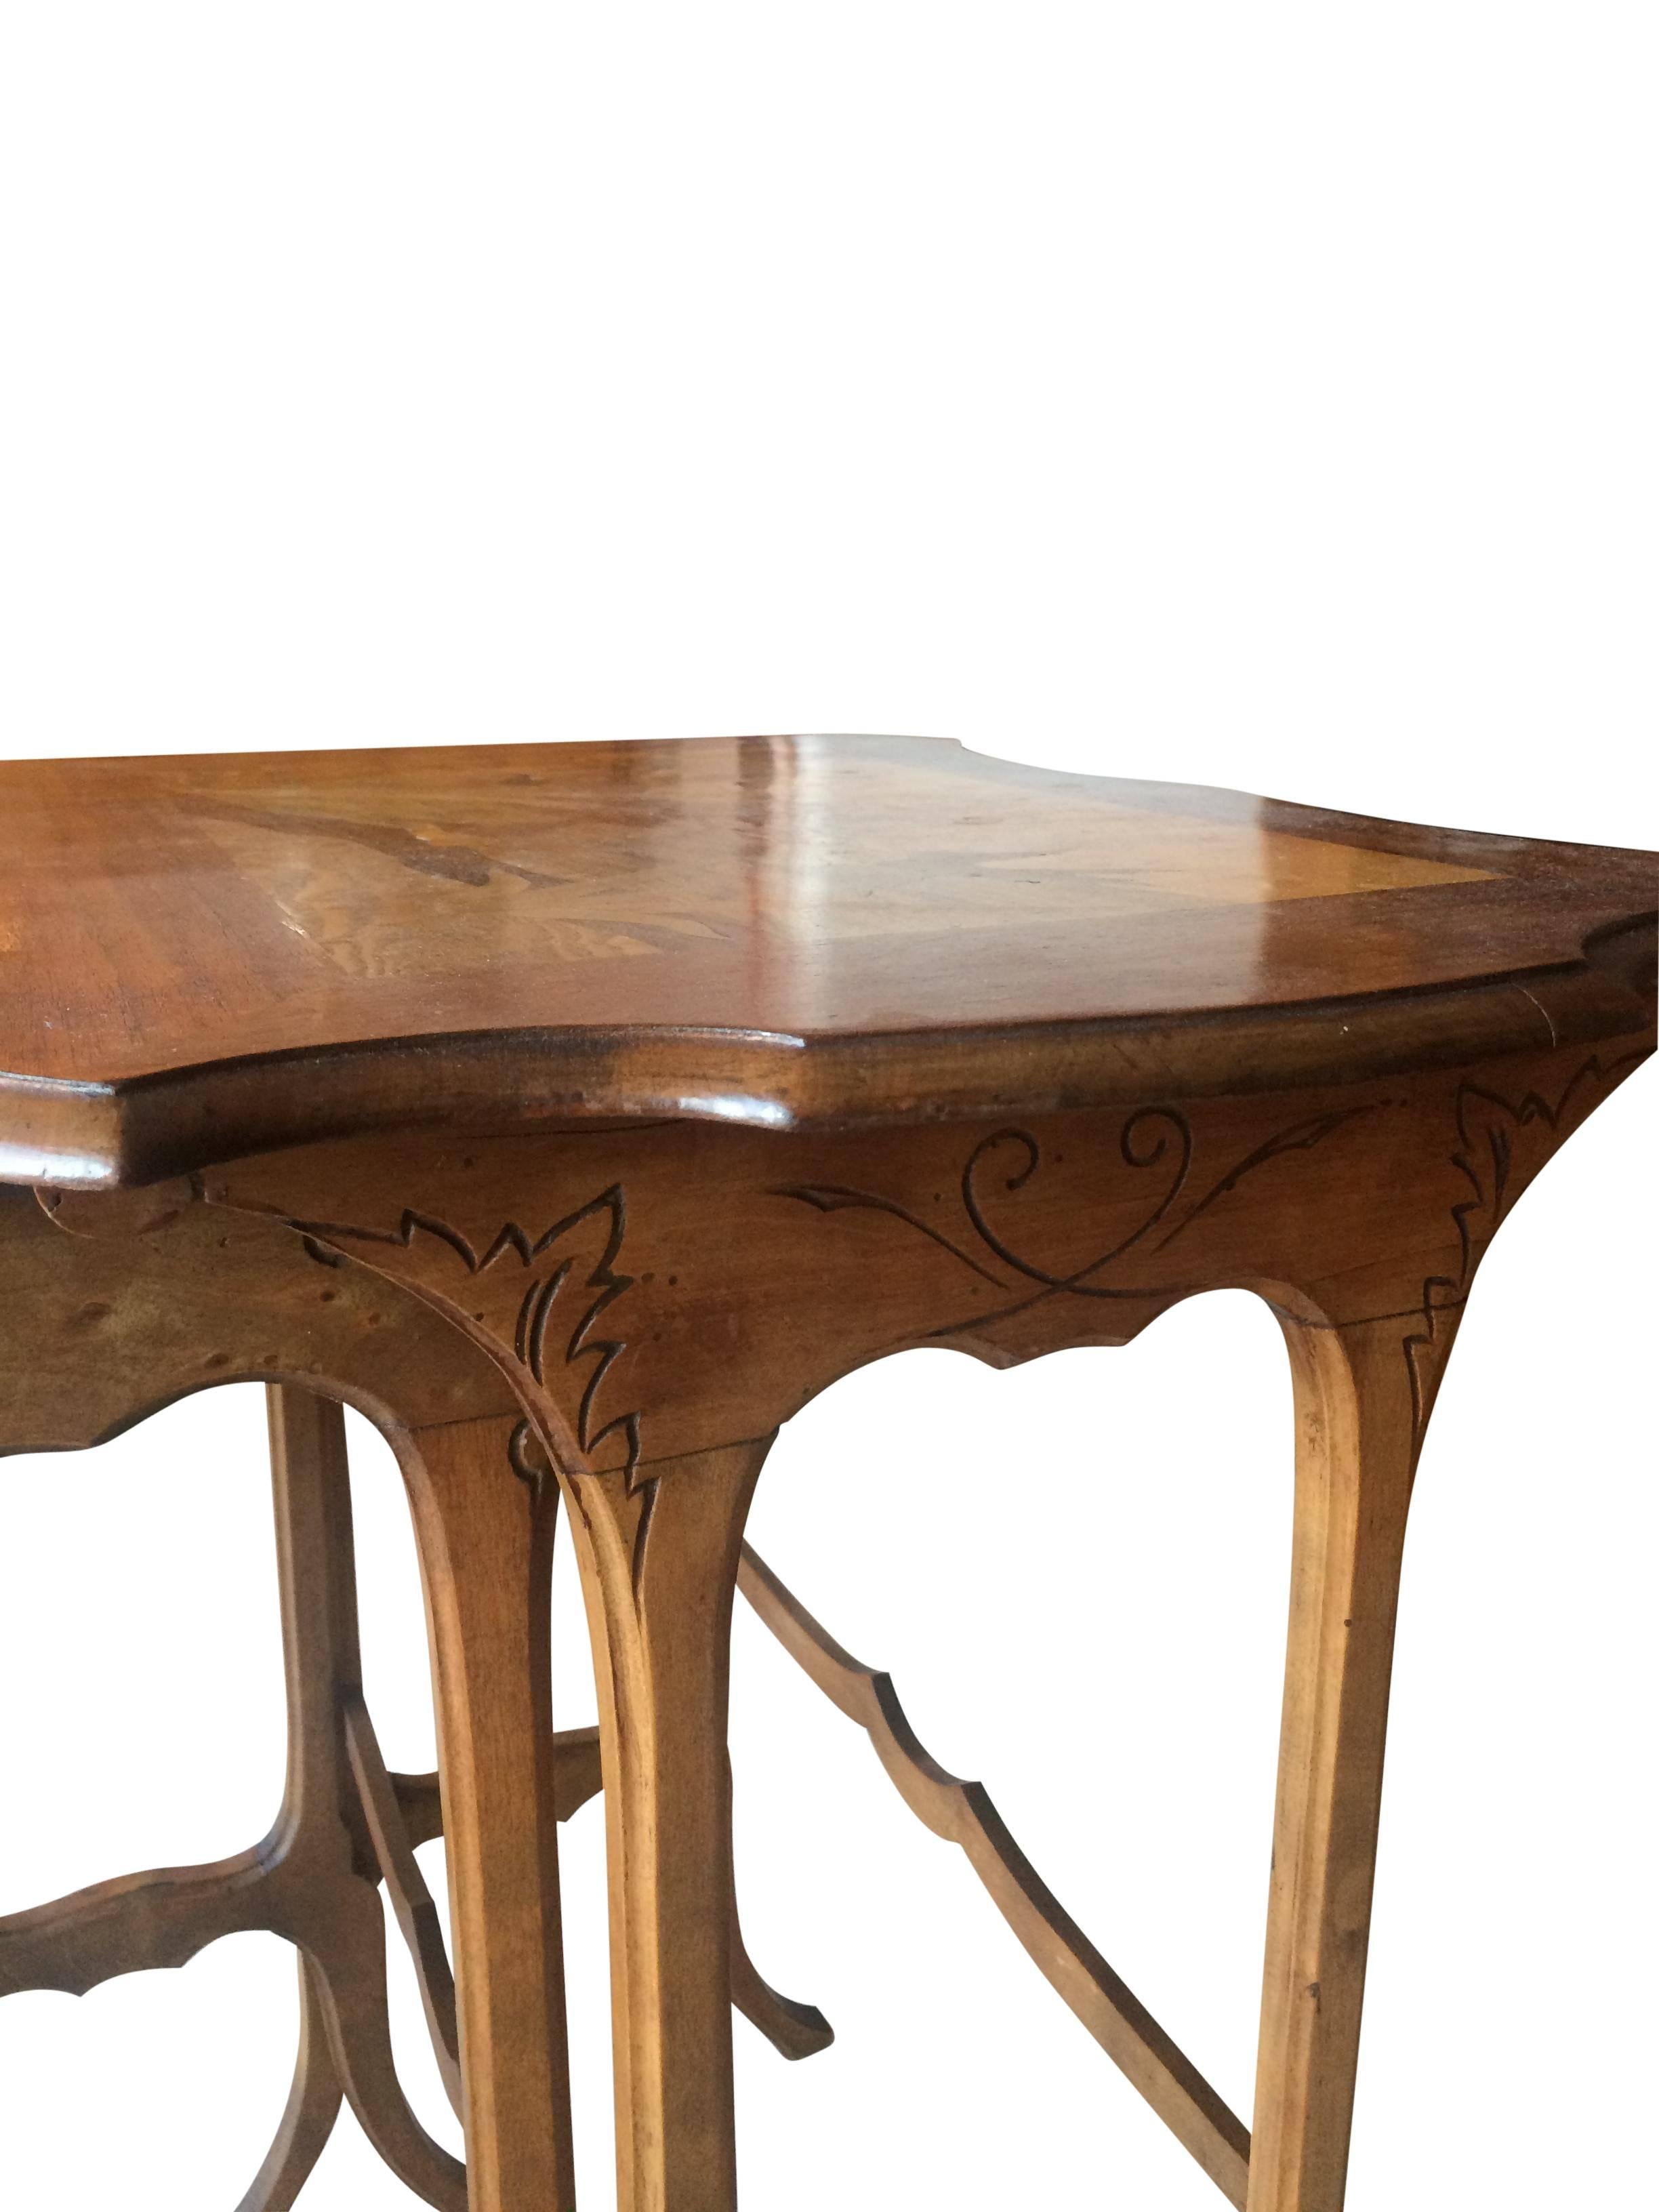 French Emile Gallé, Art Nouveau Set of Nesting Tables Four Seasons, Signed Galle For Sale